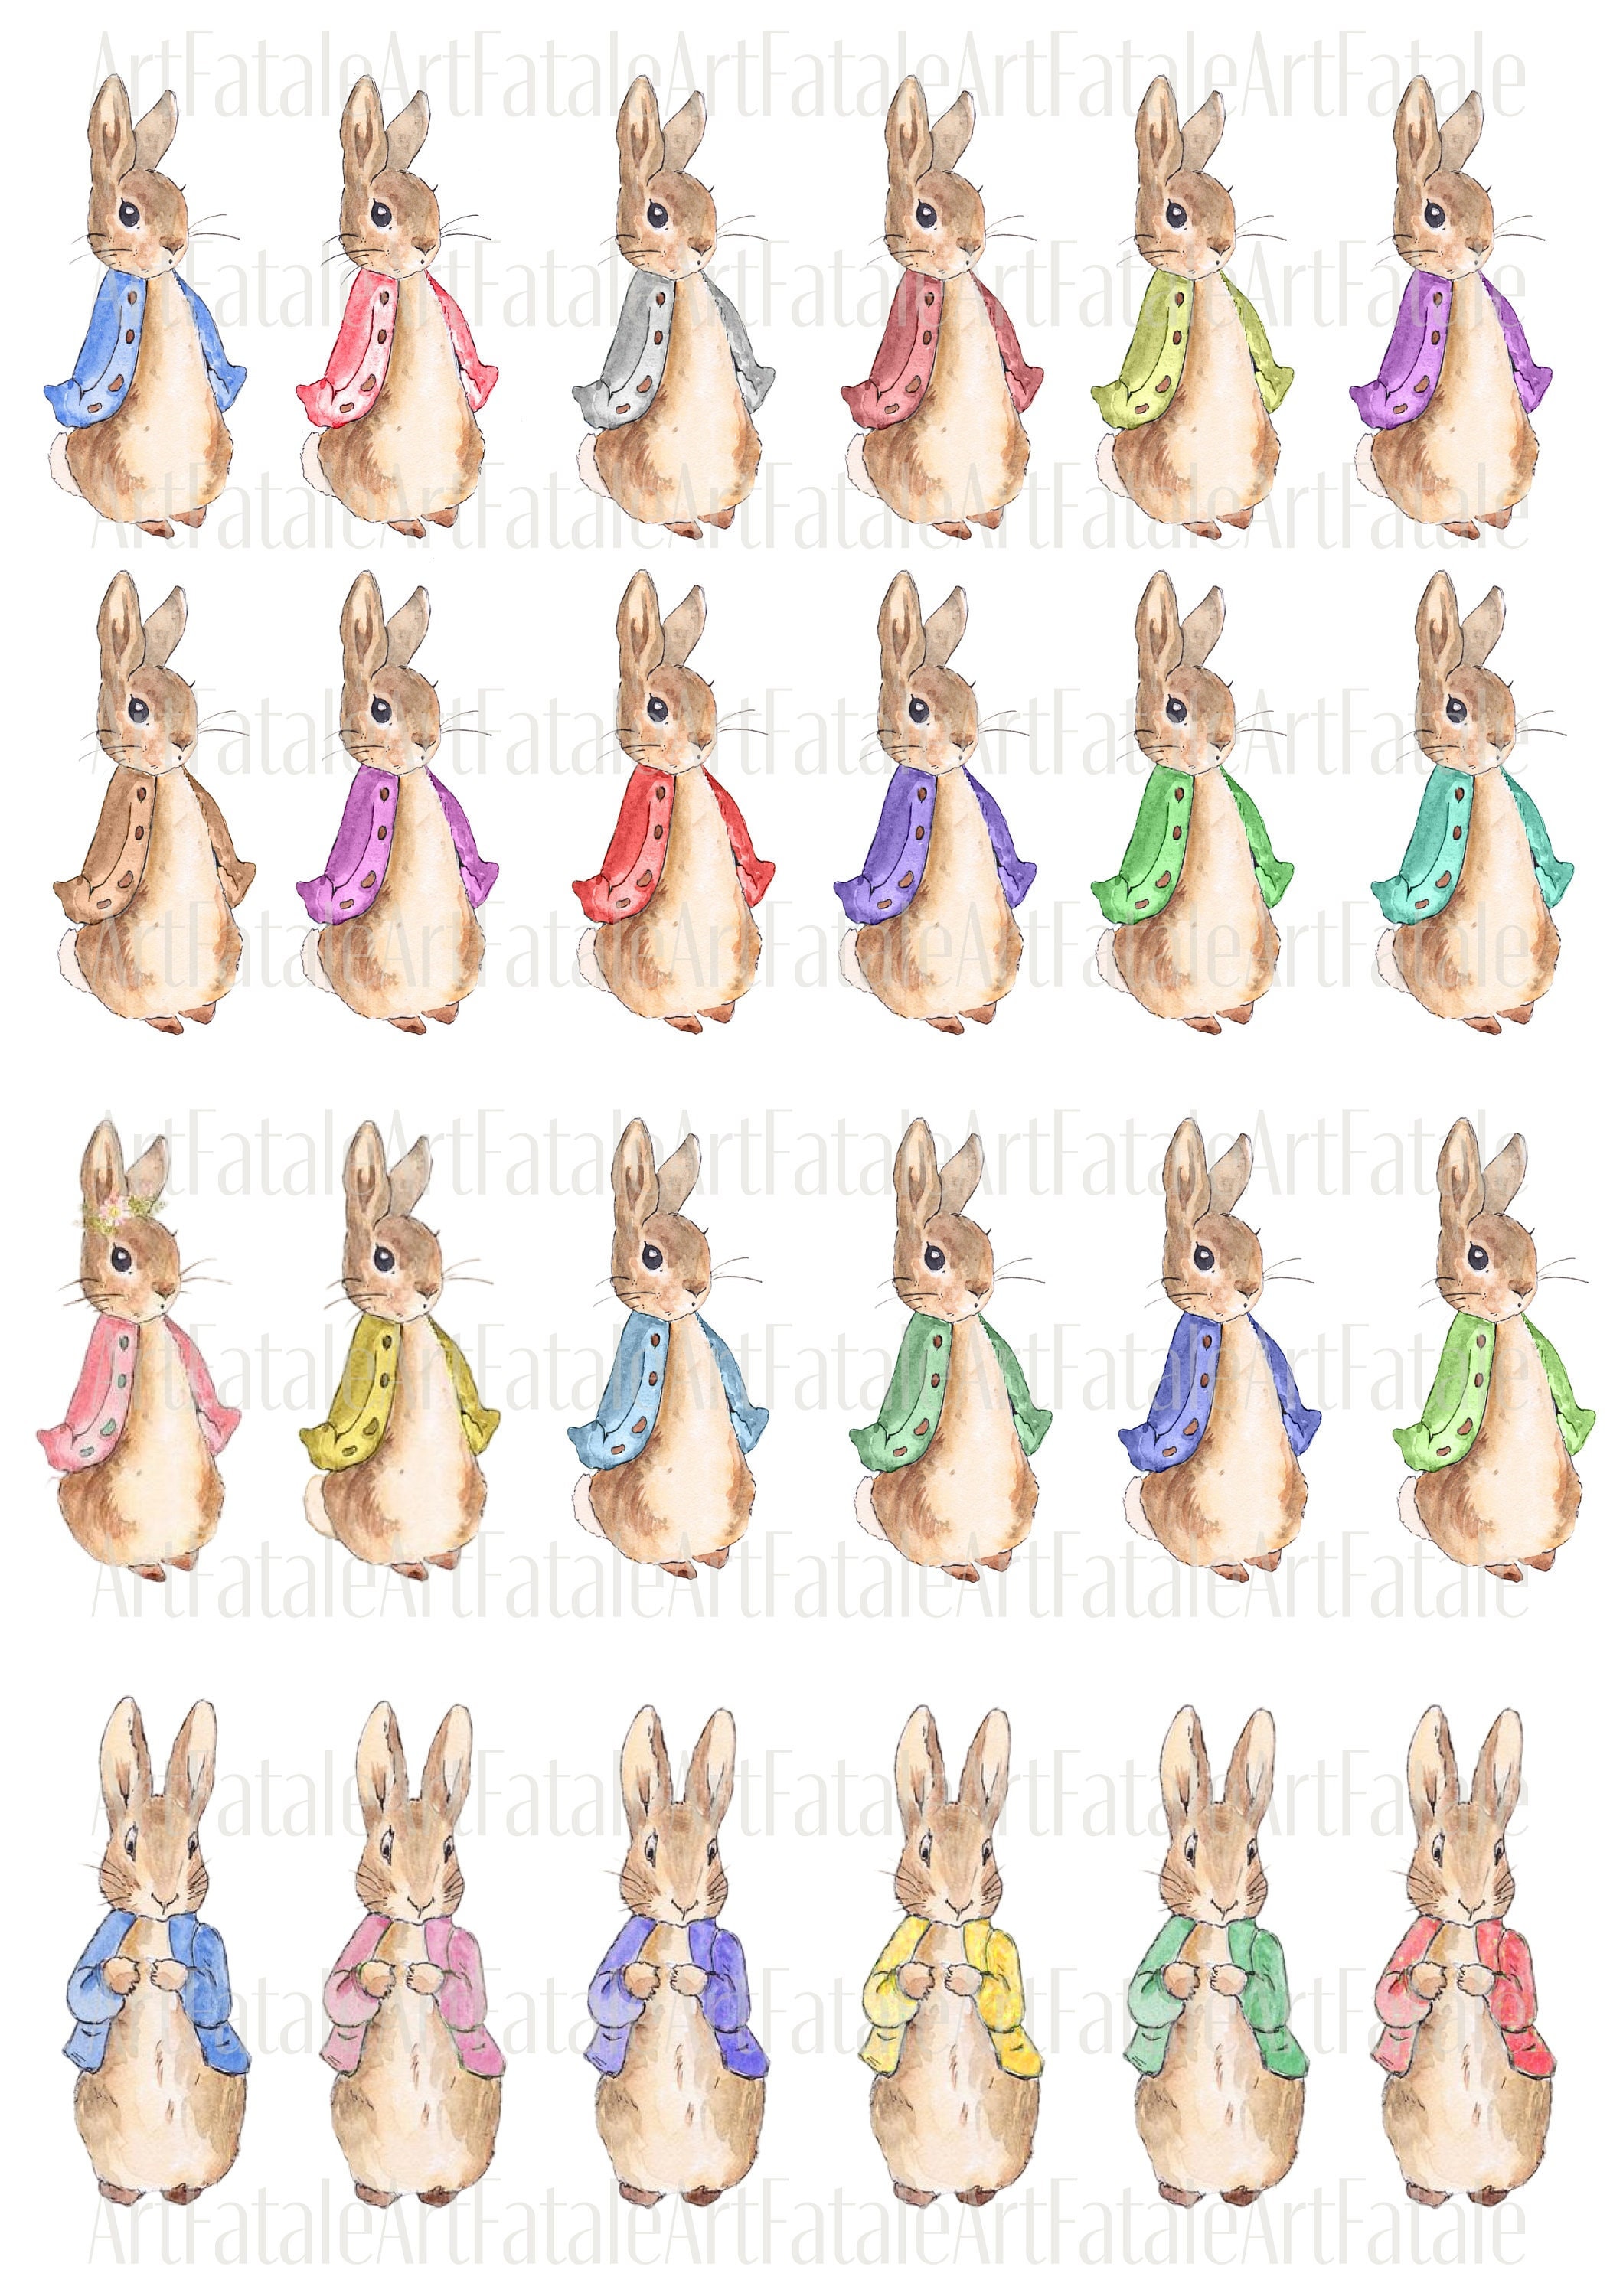 Pink Peter Rabbit Bookmark set of 12 Beatrix Potter Baby Shower